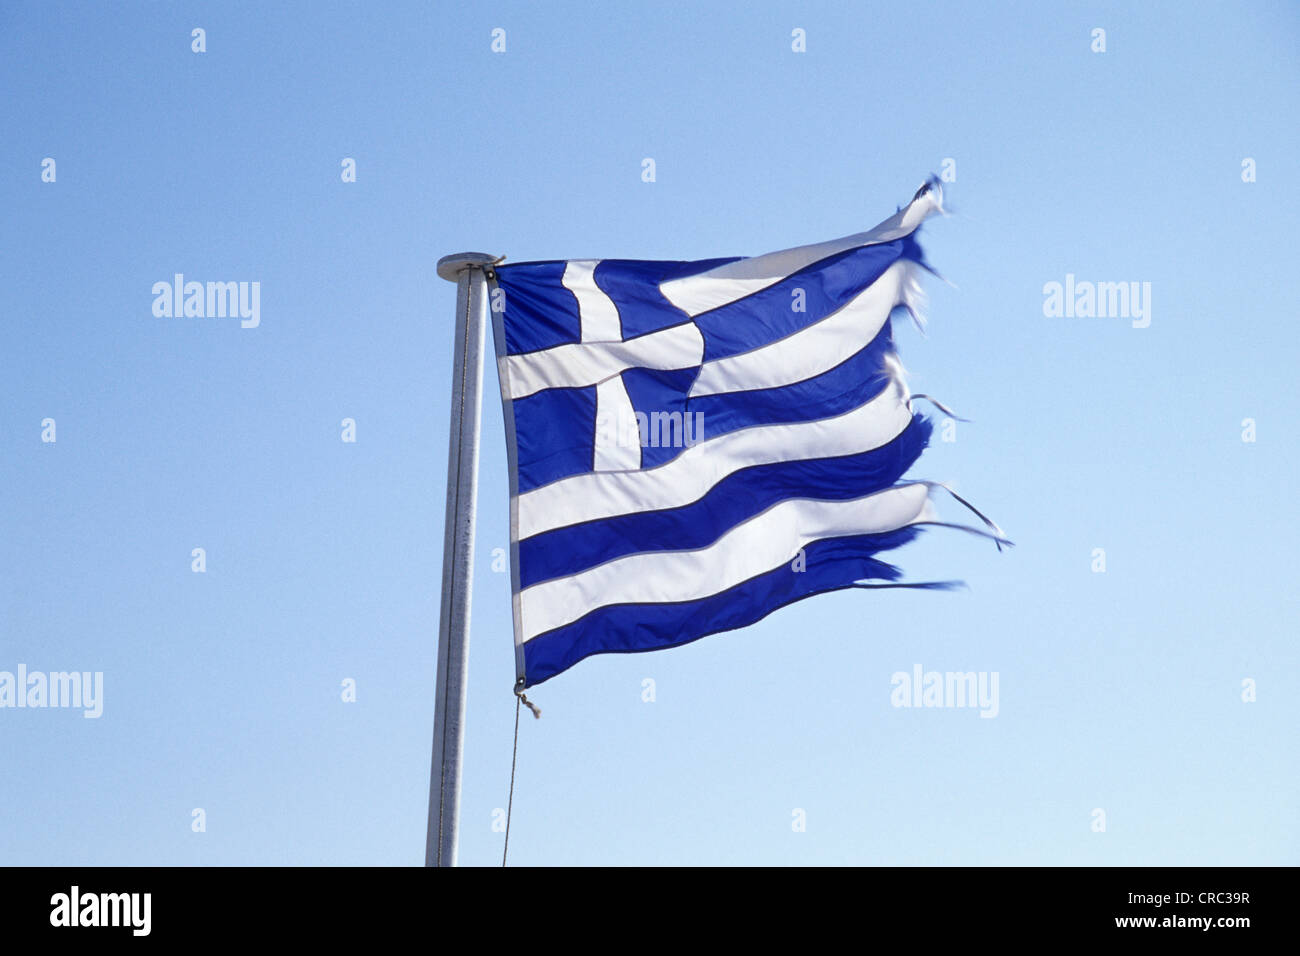 Worn Greek national flag, symbolic image for the economic crisis, Greece, Europe Stock Photo